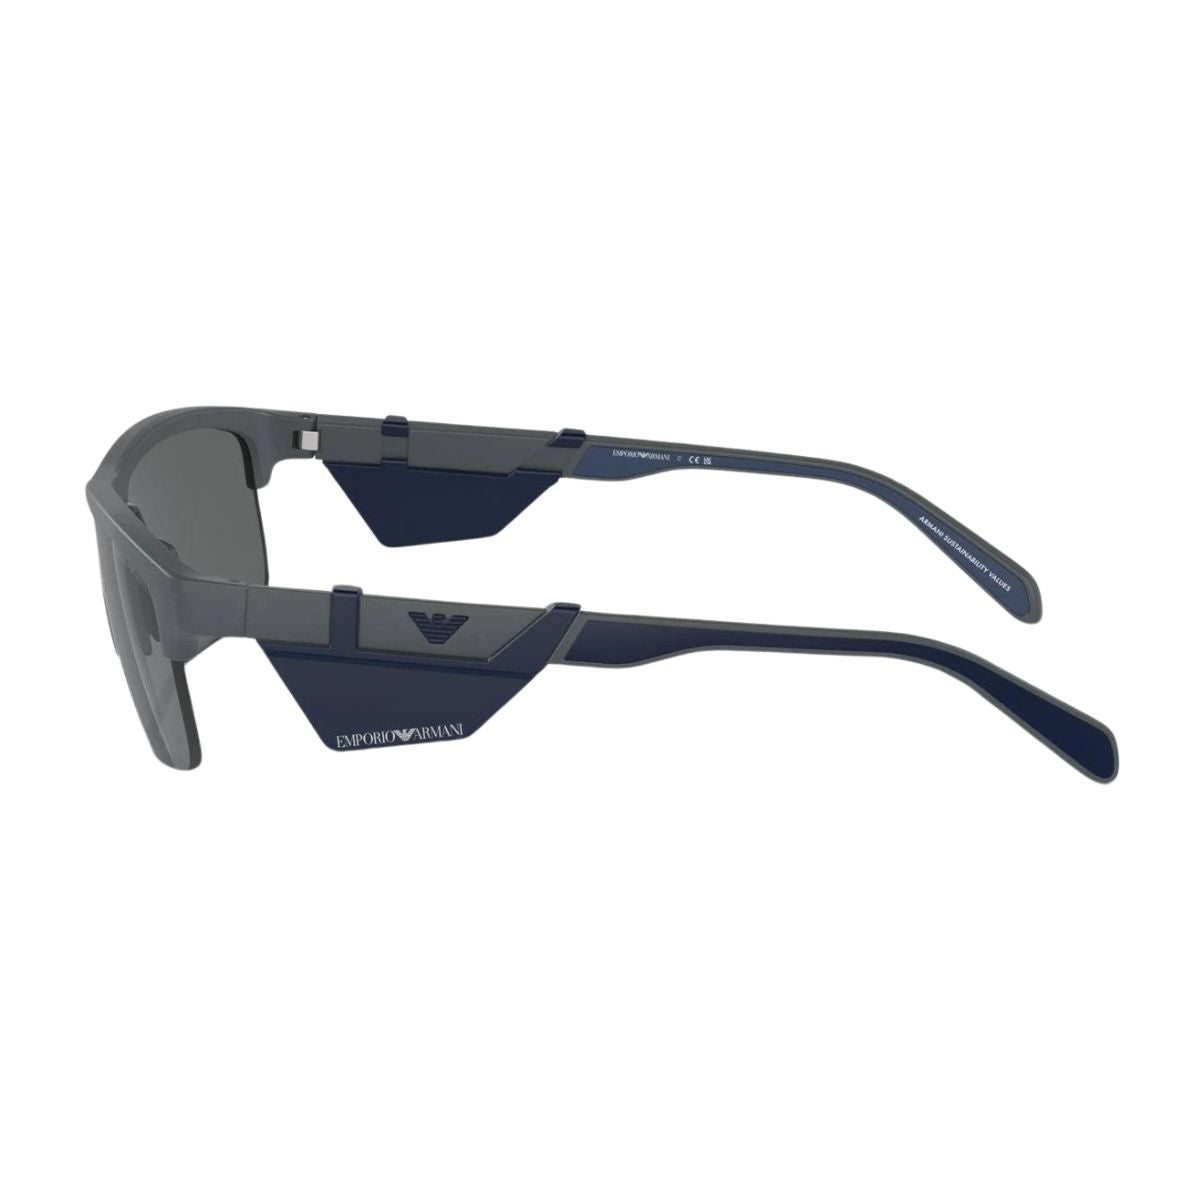 "Buy Rectangle Shape Emporio Armani UV Protection Sunglasses For Men's | Optorium"